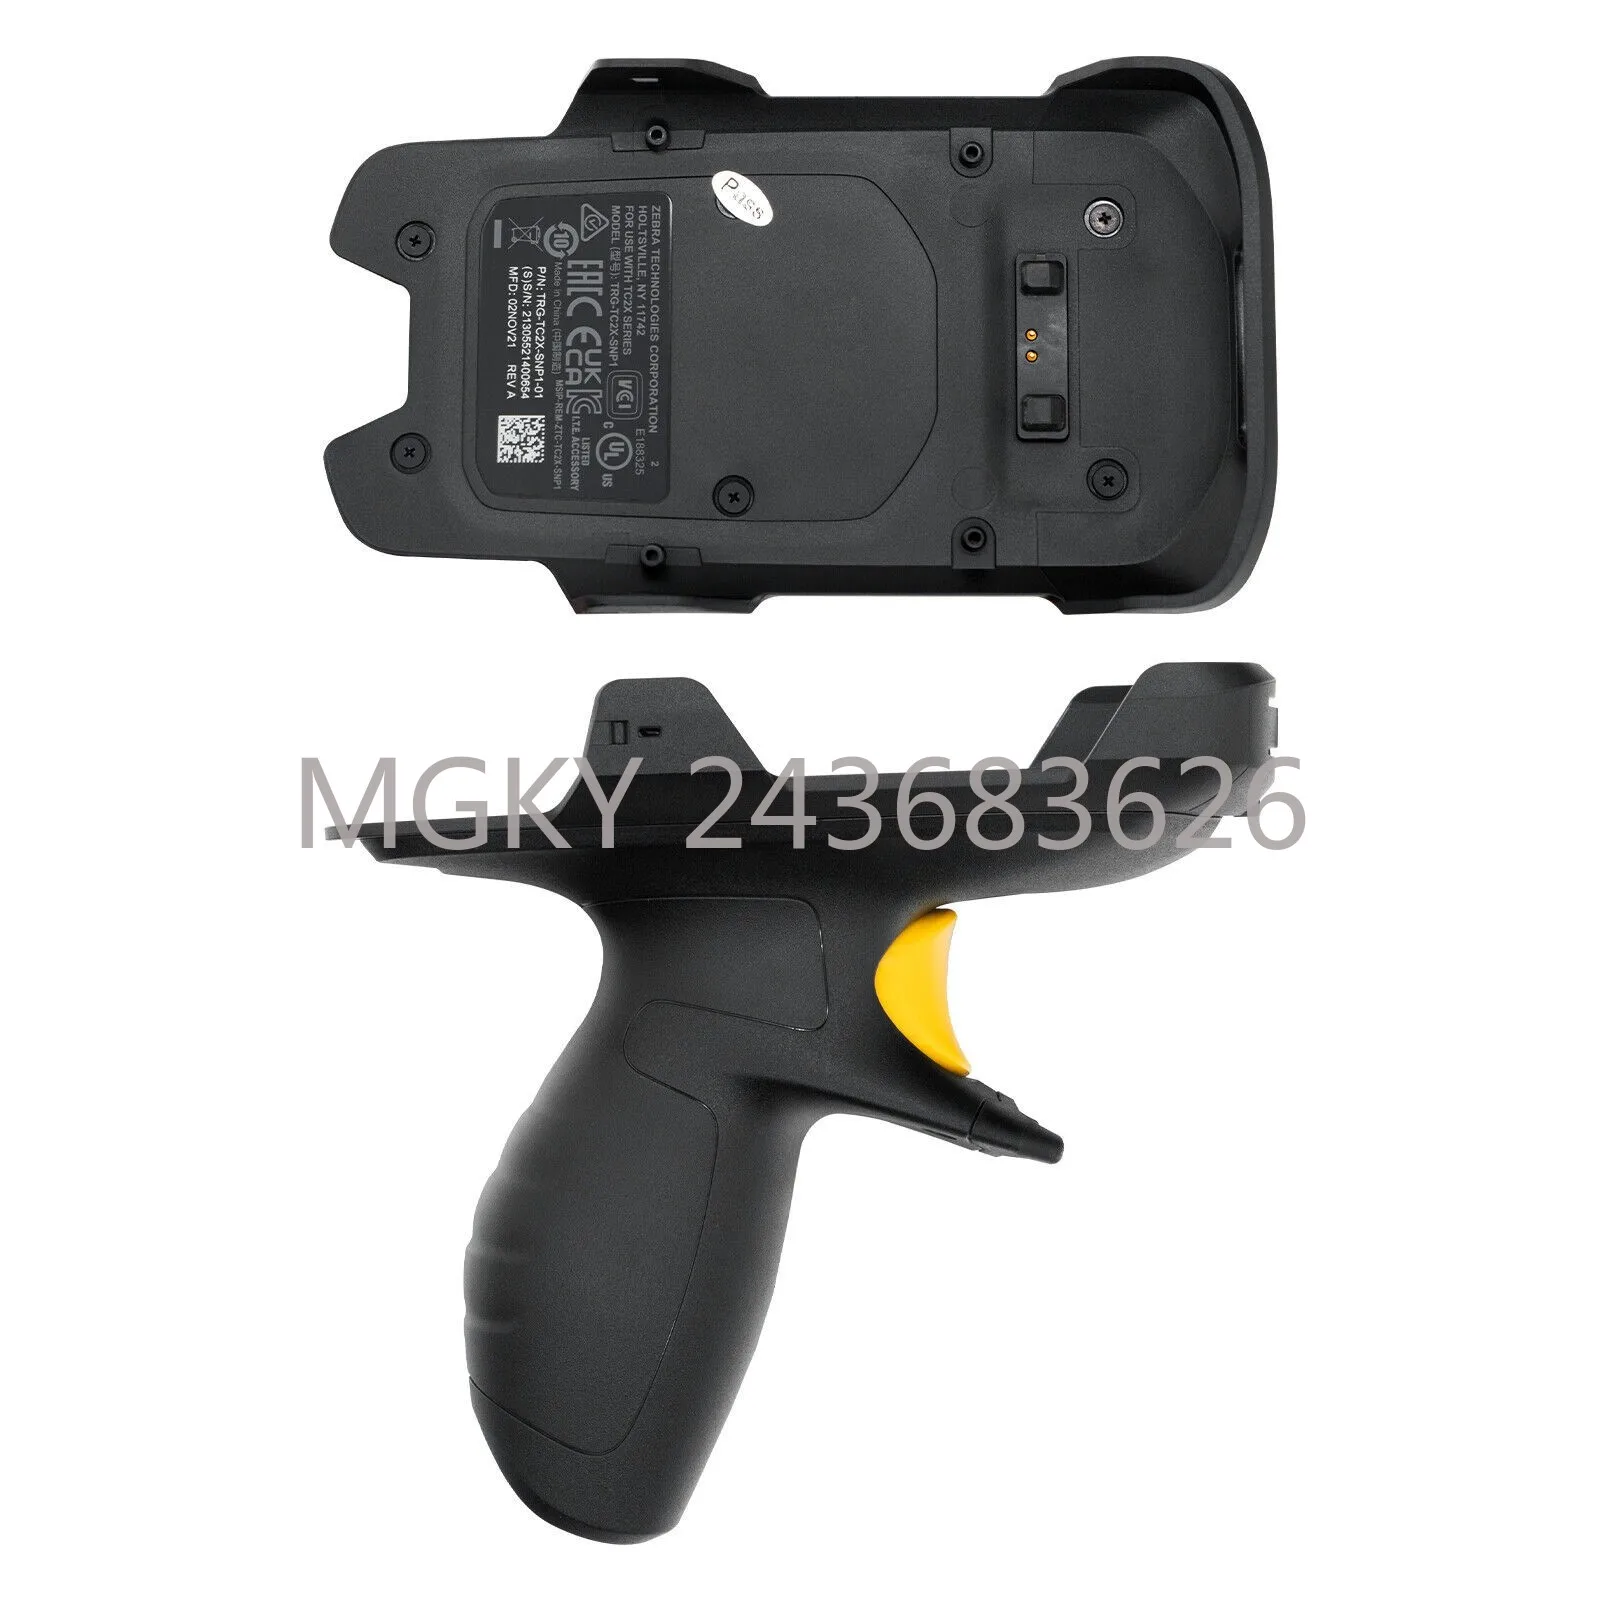 

1pcs Snap On Trigger Pistol Grip Handle For Zebra Motorola TC20 TC25 New